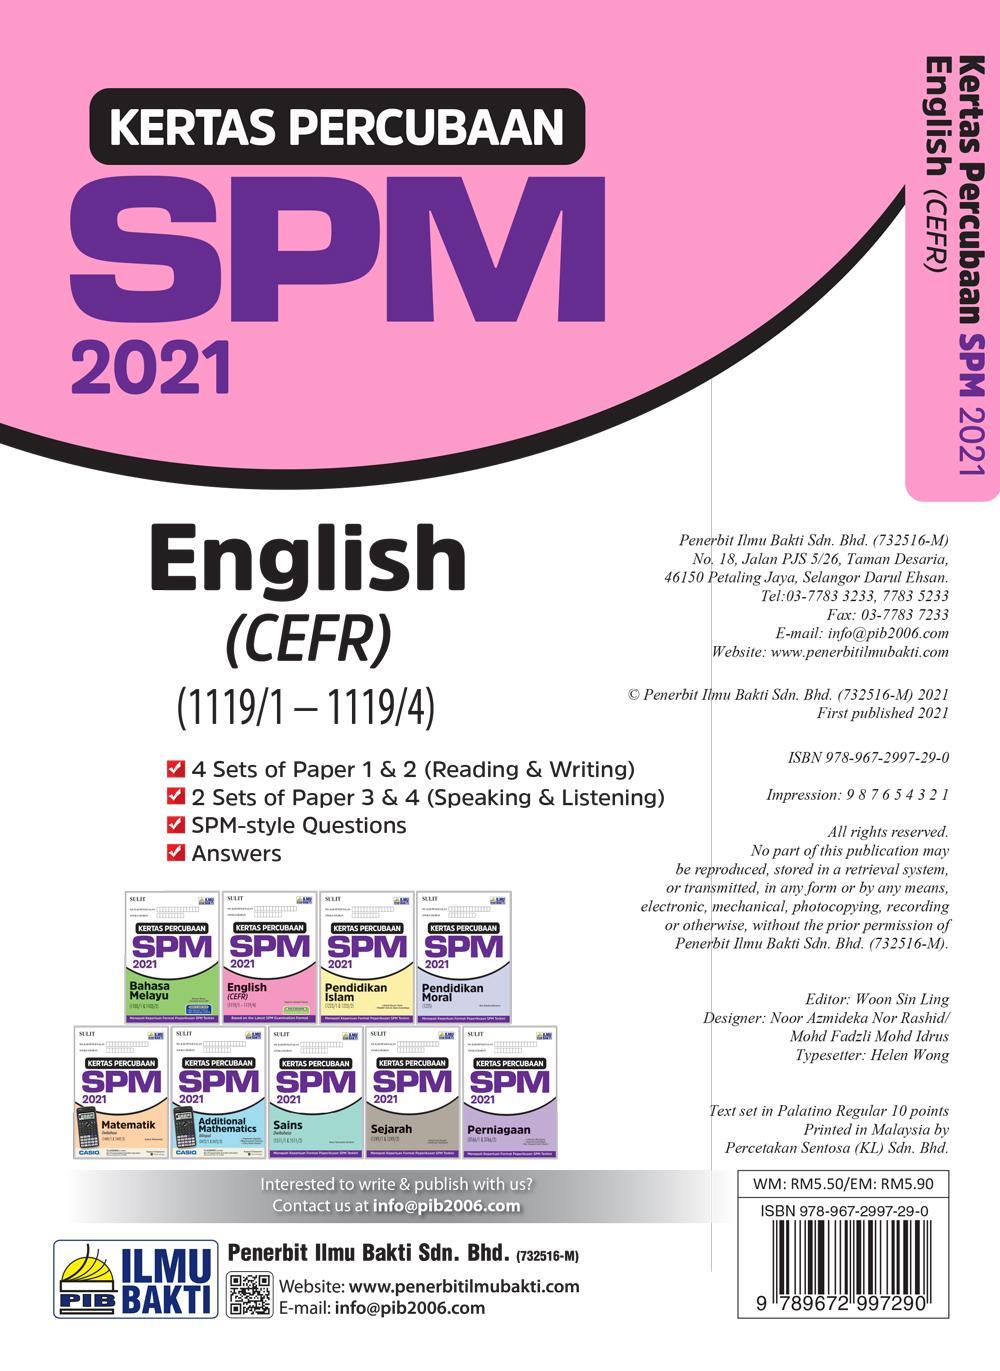 1 2021 spm paper english SPM English